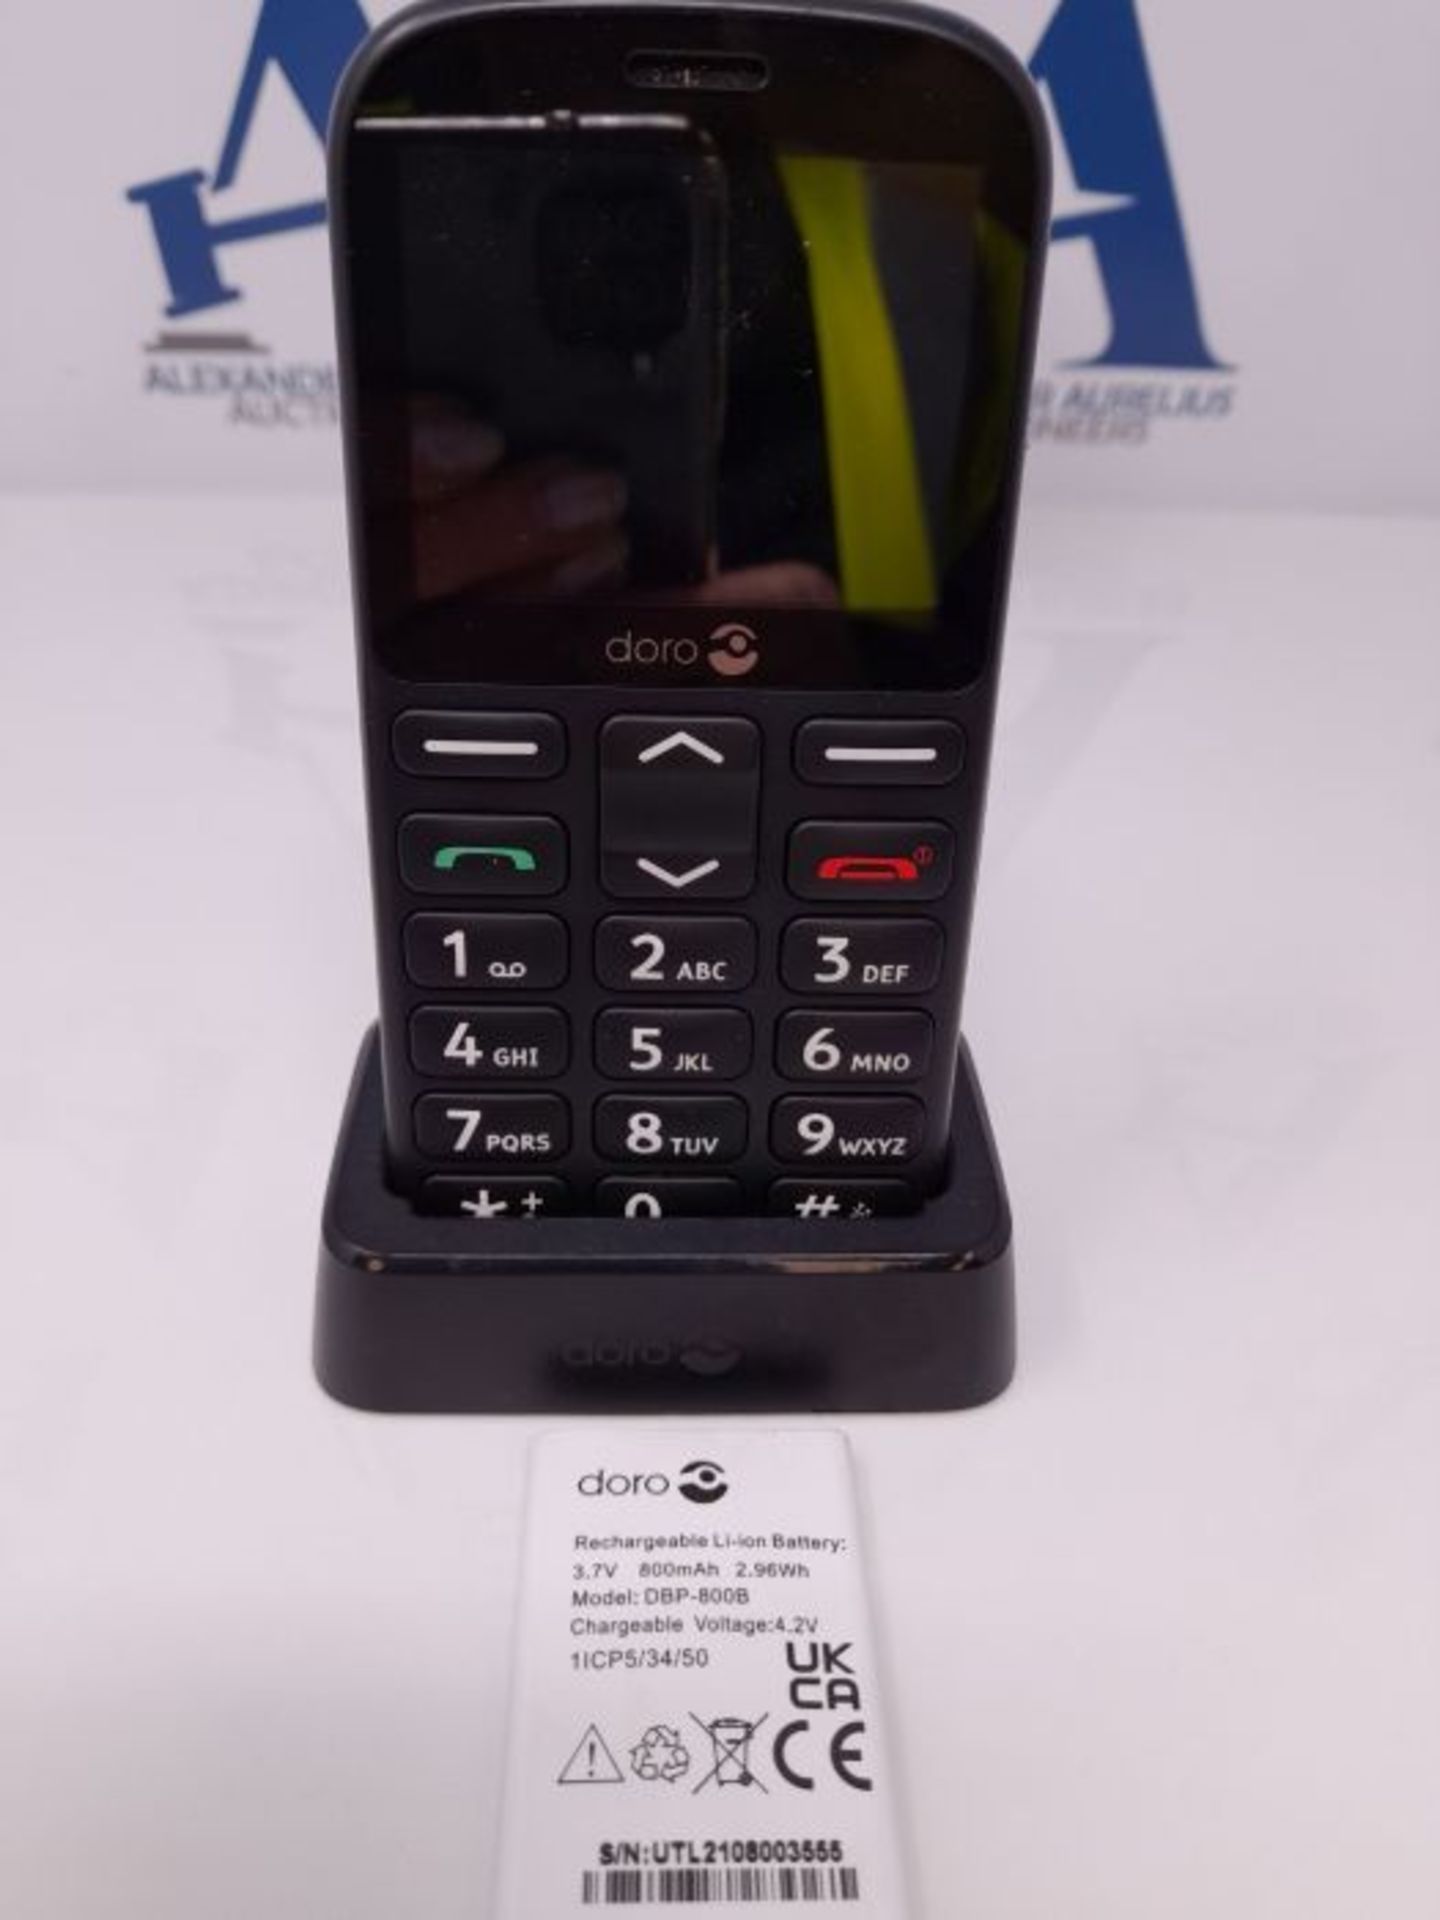 Doro 1361 Easy Mobile Phone - Black - Image 3 of 3